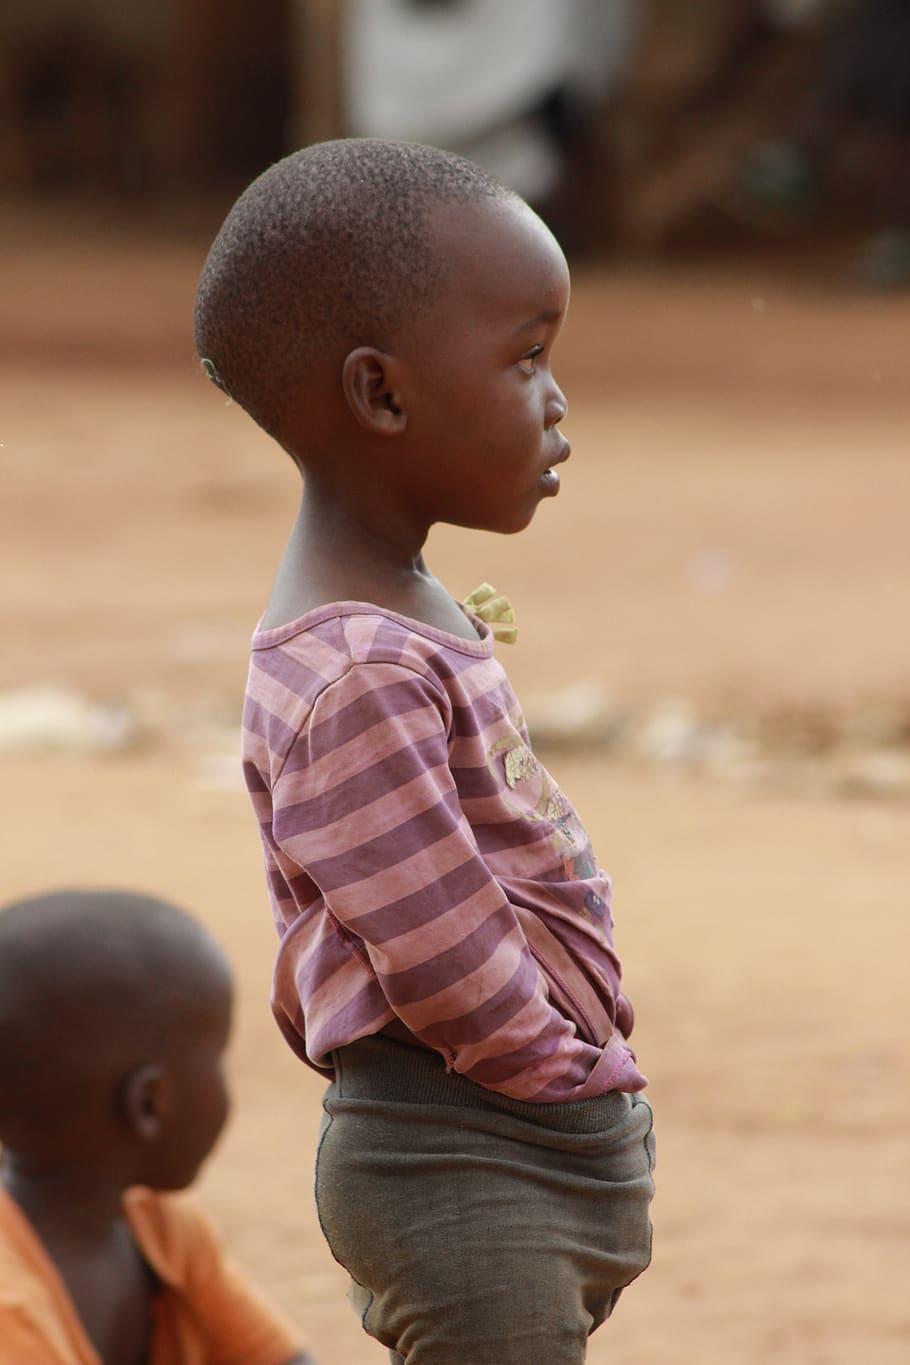 uganda, áfrica, pobreza, joven, negro, vida, niño, pobre, niños, rural